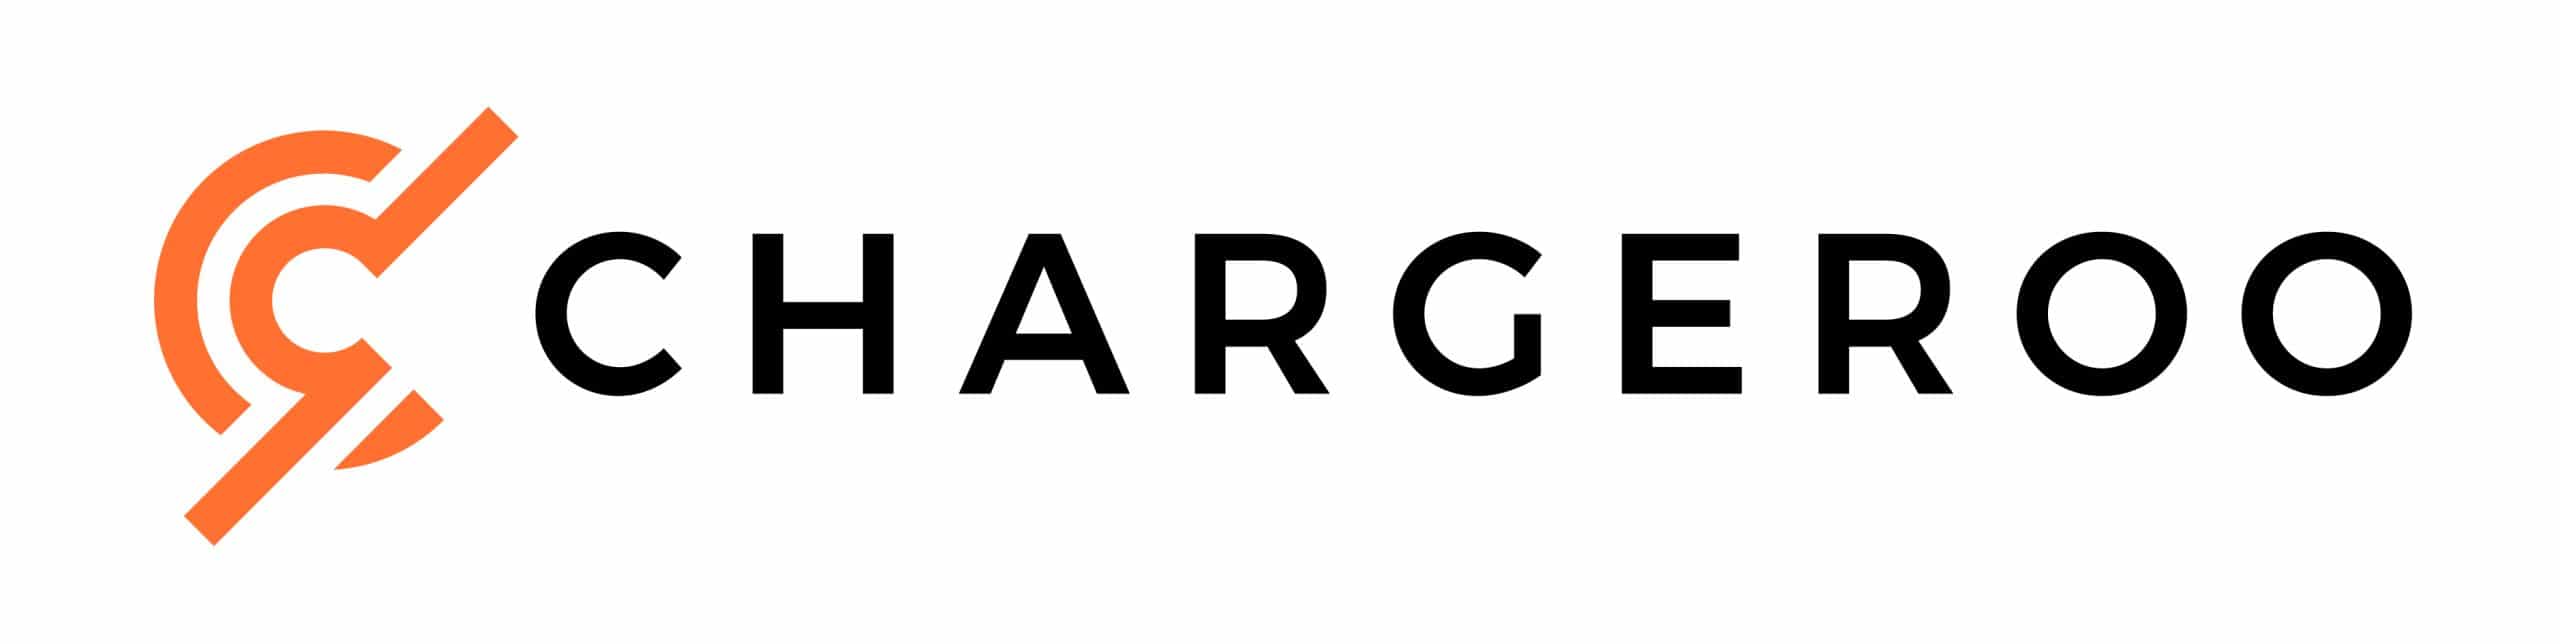 Chargeroo logo